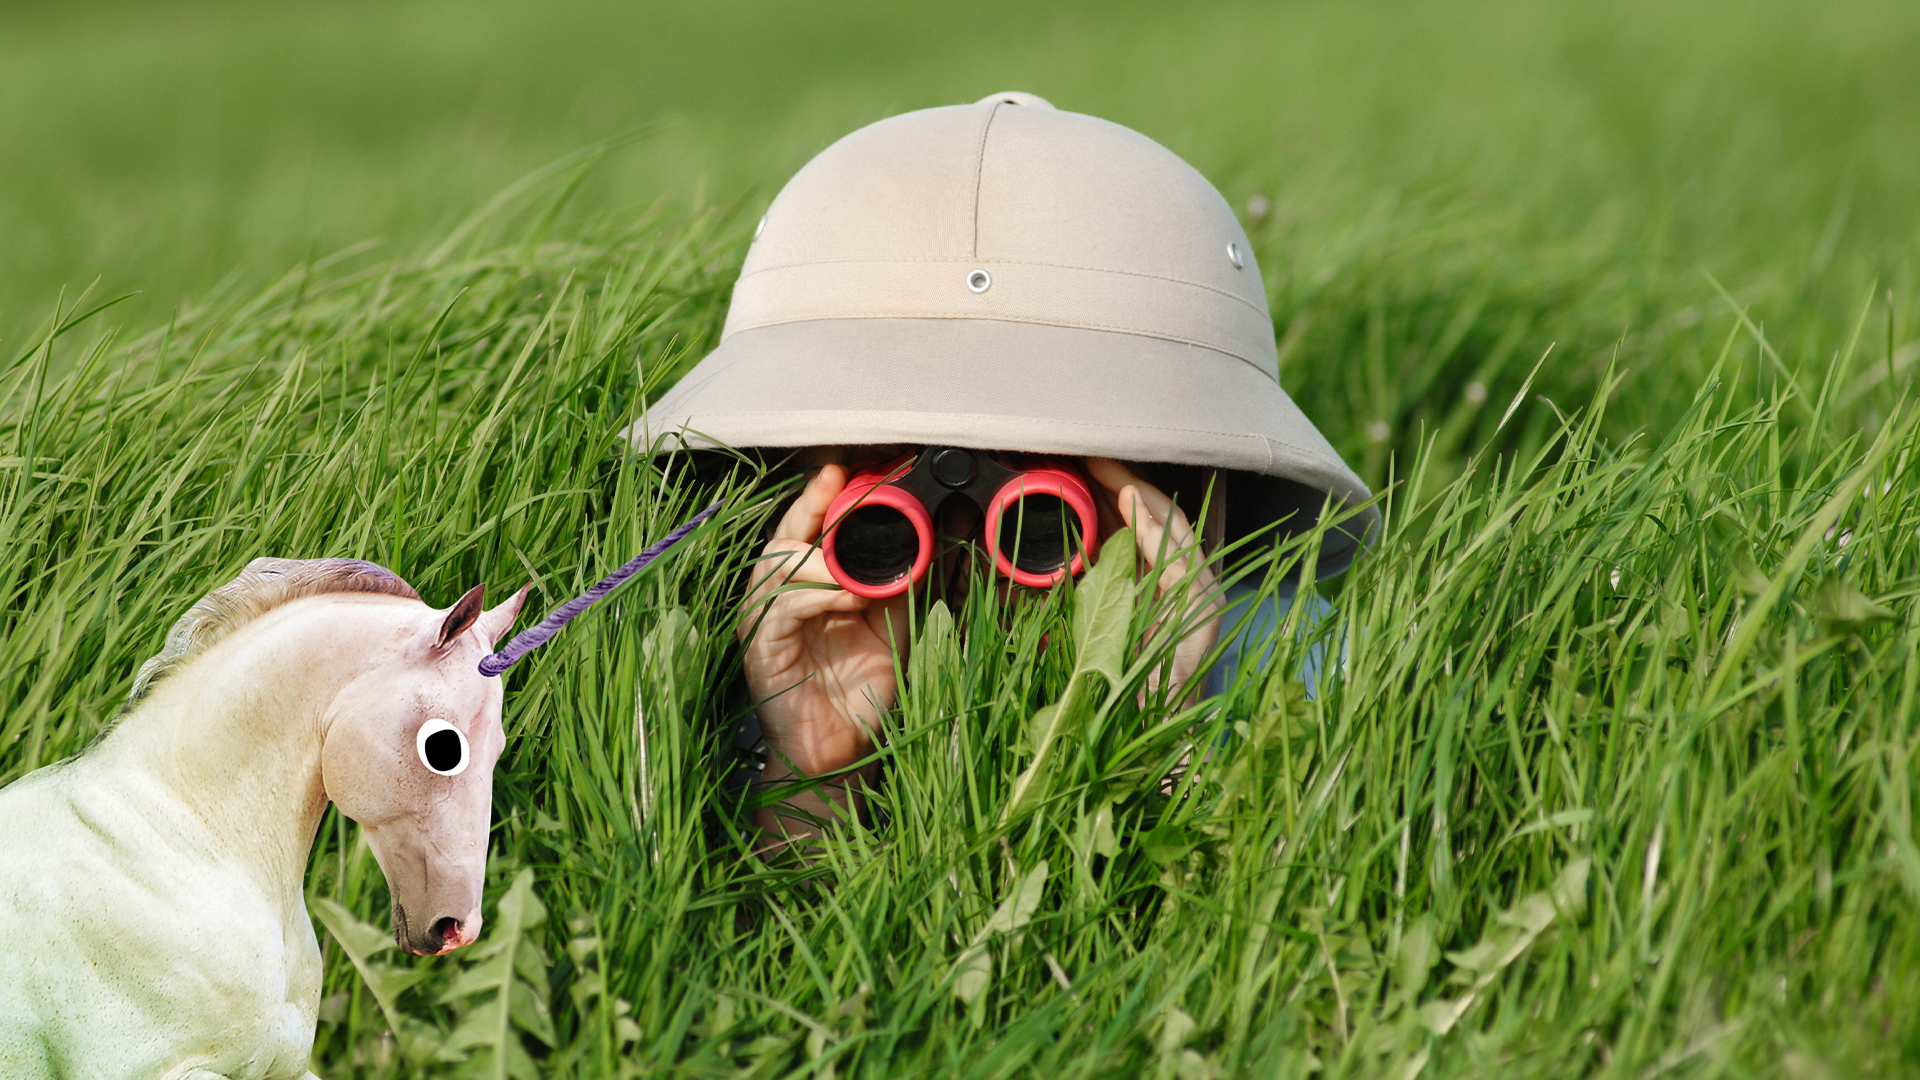 Boy with binoculars in grass with Beano unicorn